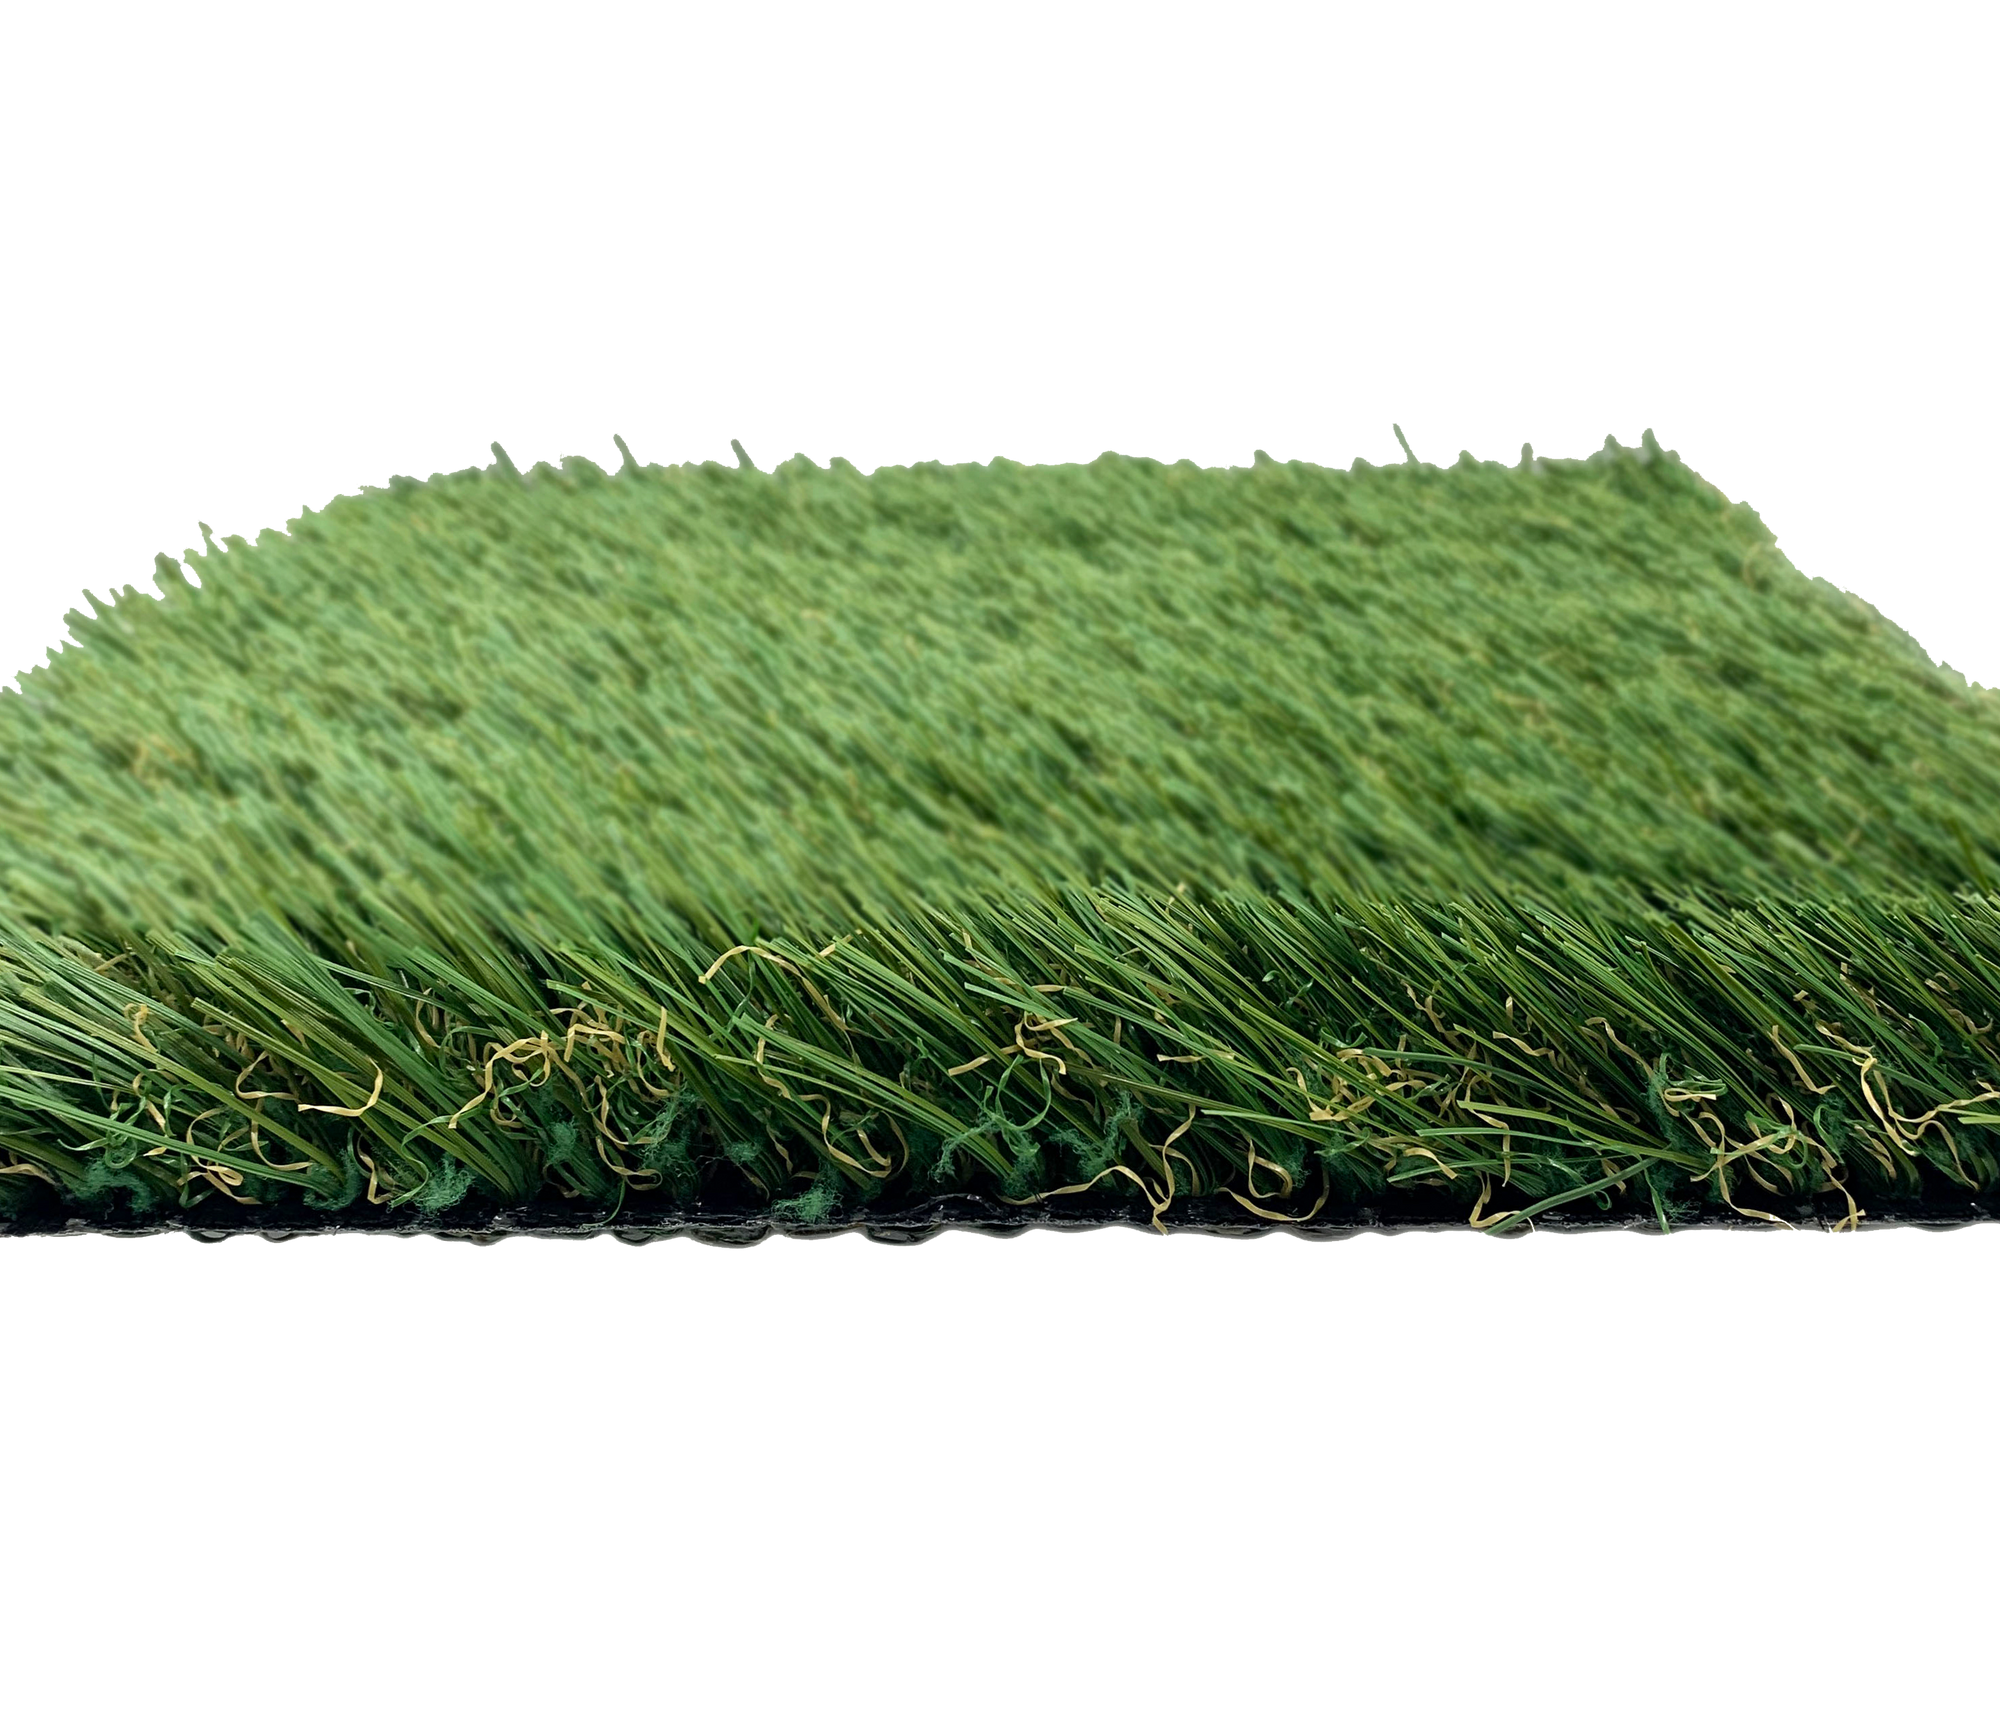 Reserve Sanctuary-Synthetic Grass Turf-Shawgrass-Shaw-301-Urethane-1.75-KNB Mills